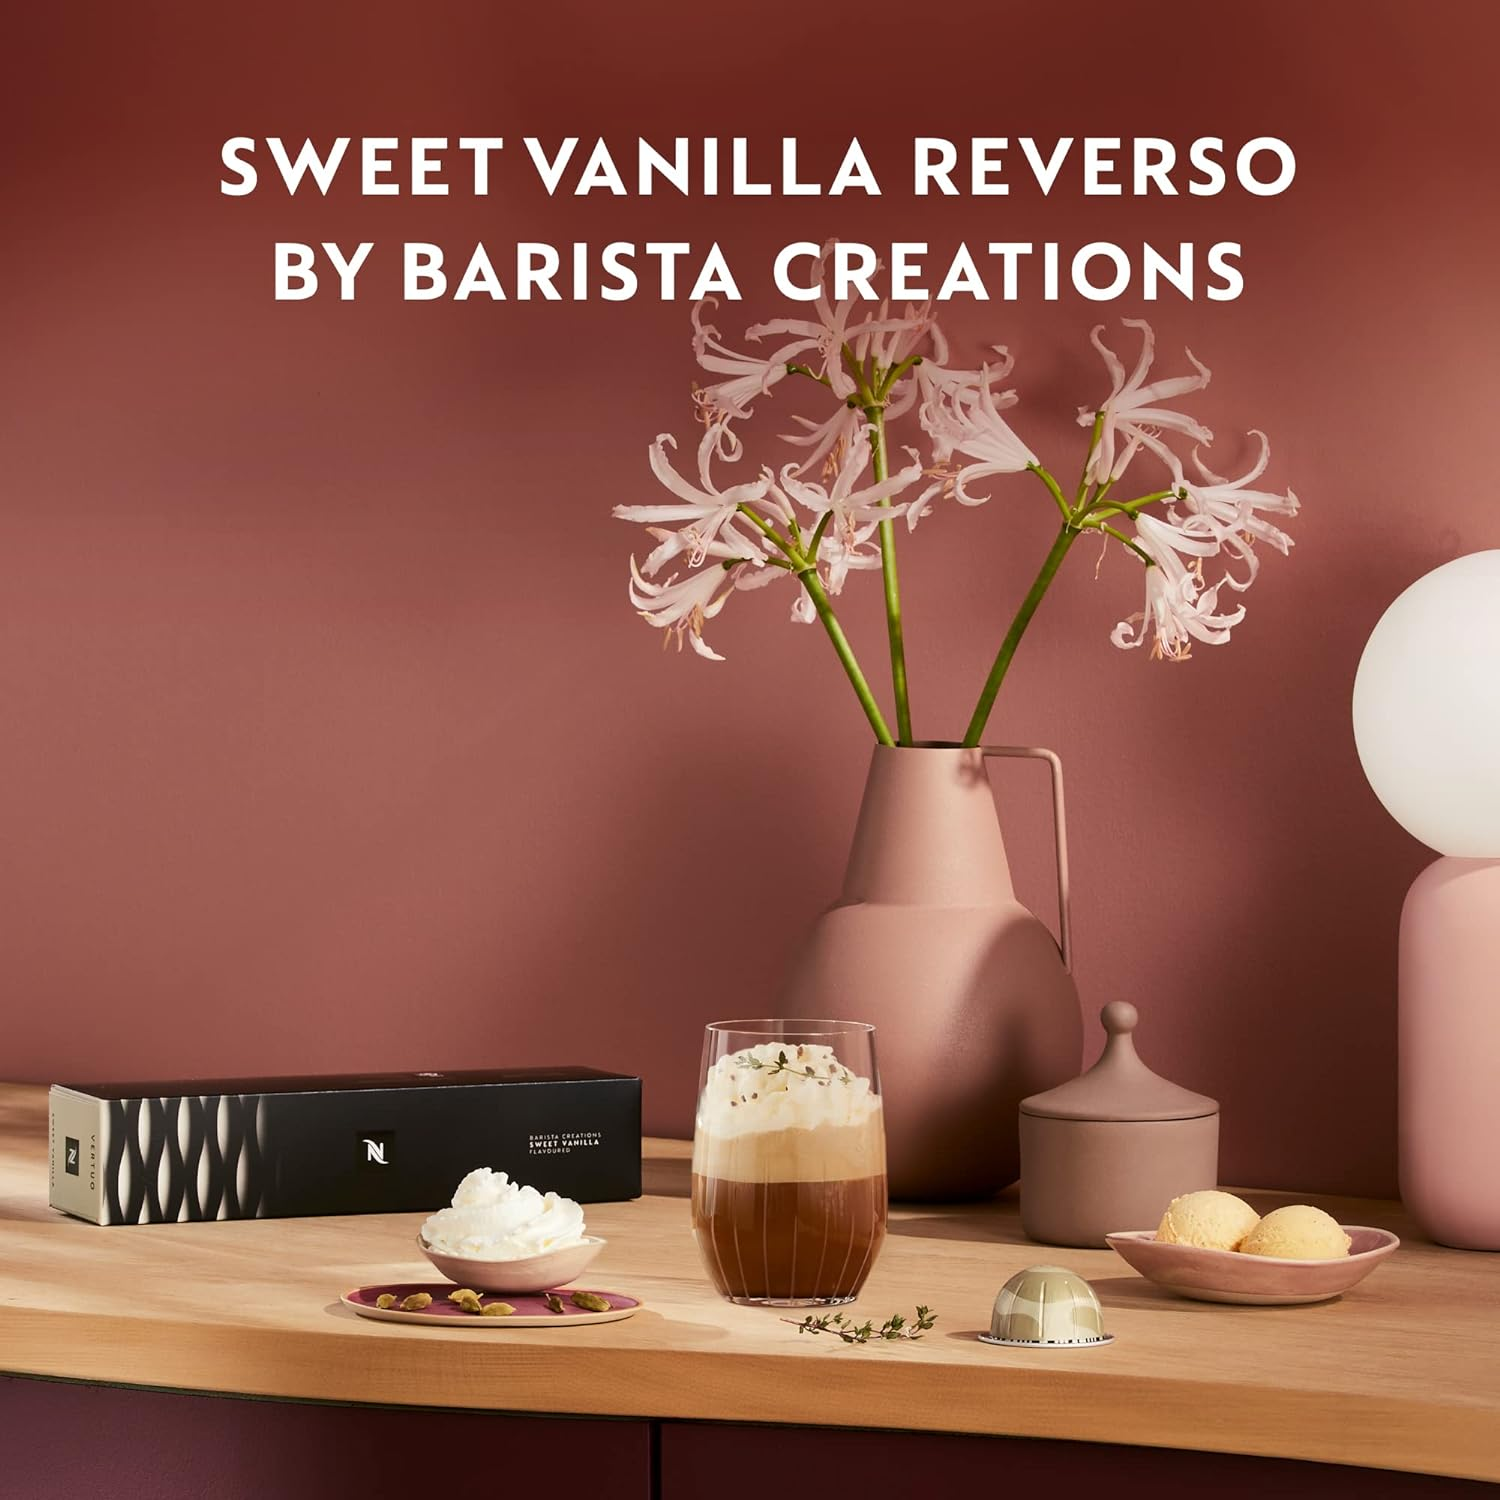 Nespresso Capsules Vertuo, Sweet Vanilla, Medium Roast Coffee, Coffee Pods 10pack